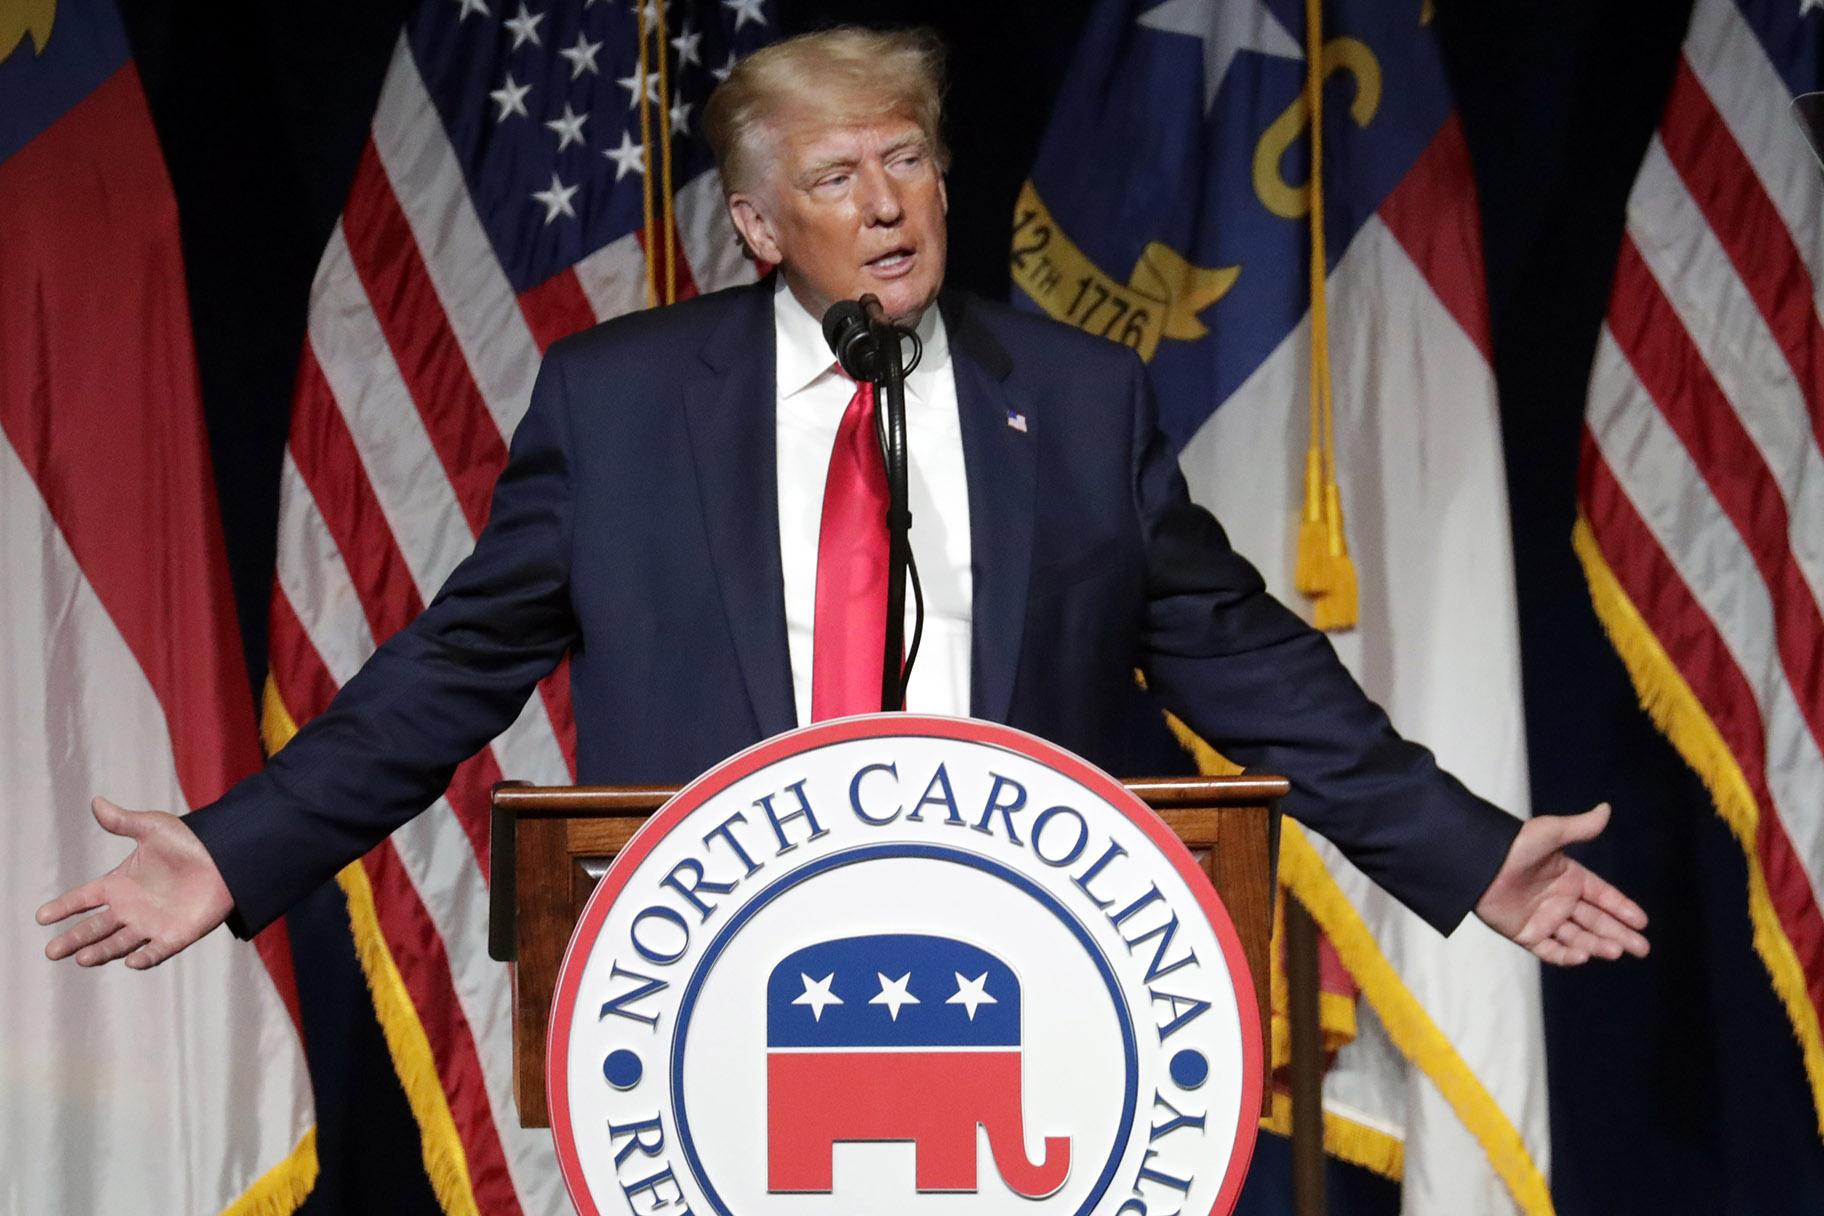 Former President Donald Trump speaks at the North Carolina Republican Convention Saturday, June 5, 2021, in Greenville, N.C. (AP Photo / Chris Seward)